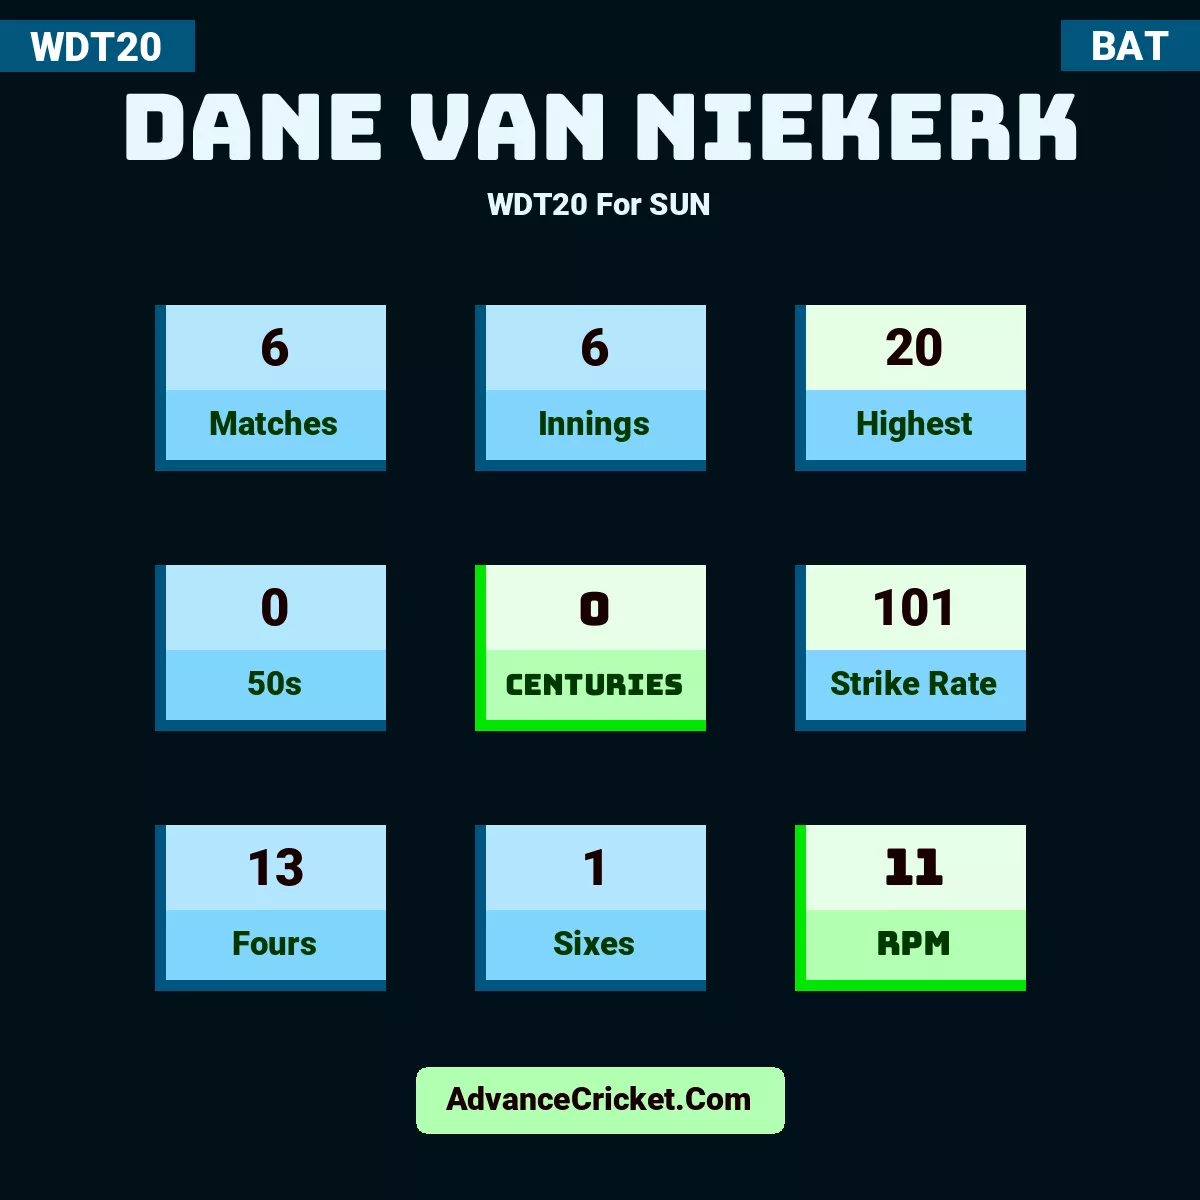 Dane van Niekerk WDT20  For SUN, Dane van Niekerk played 6 matches, scored 20 runs as highest, 0 half-centuries, and 0 centuries, with a strike rate of 101. D.Niekerk hit 13 fours and 1 sixes, with an RPM of 11.